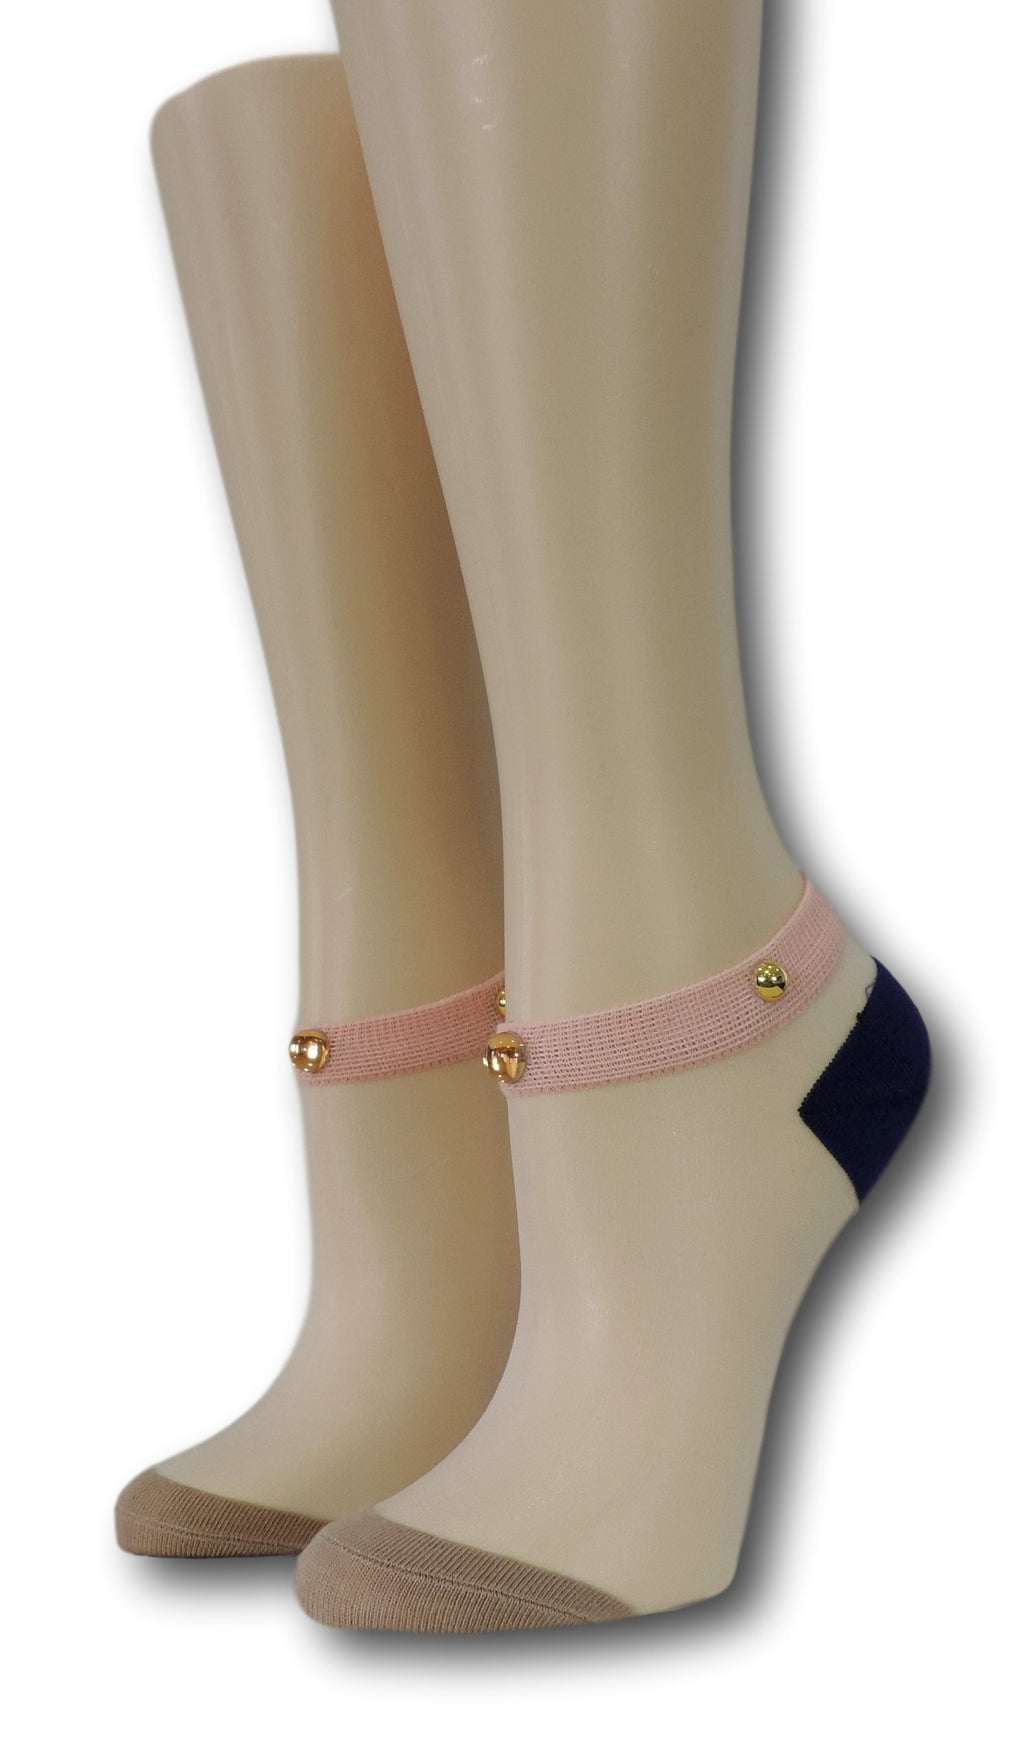 Brown-Black Ankle Sheer Socks with beads